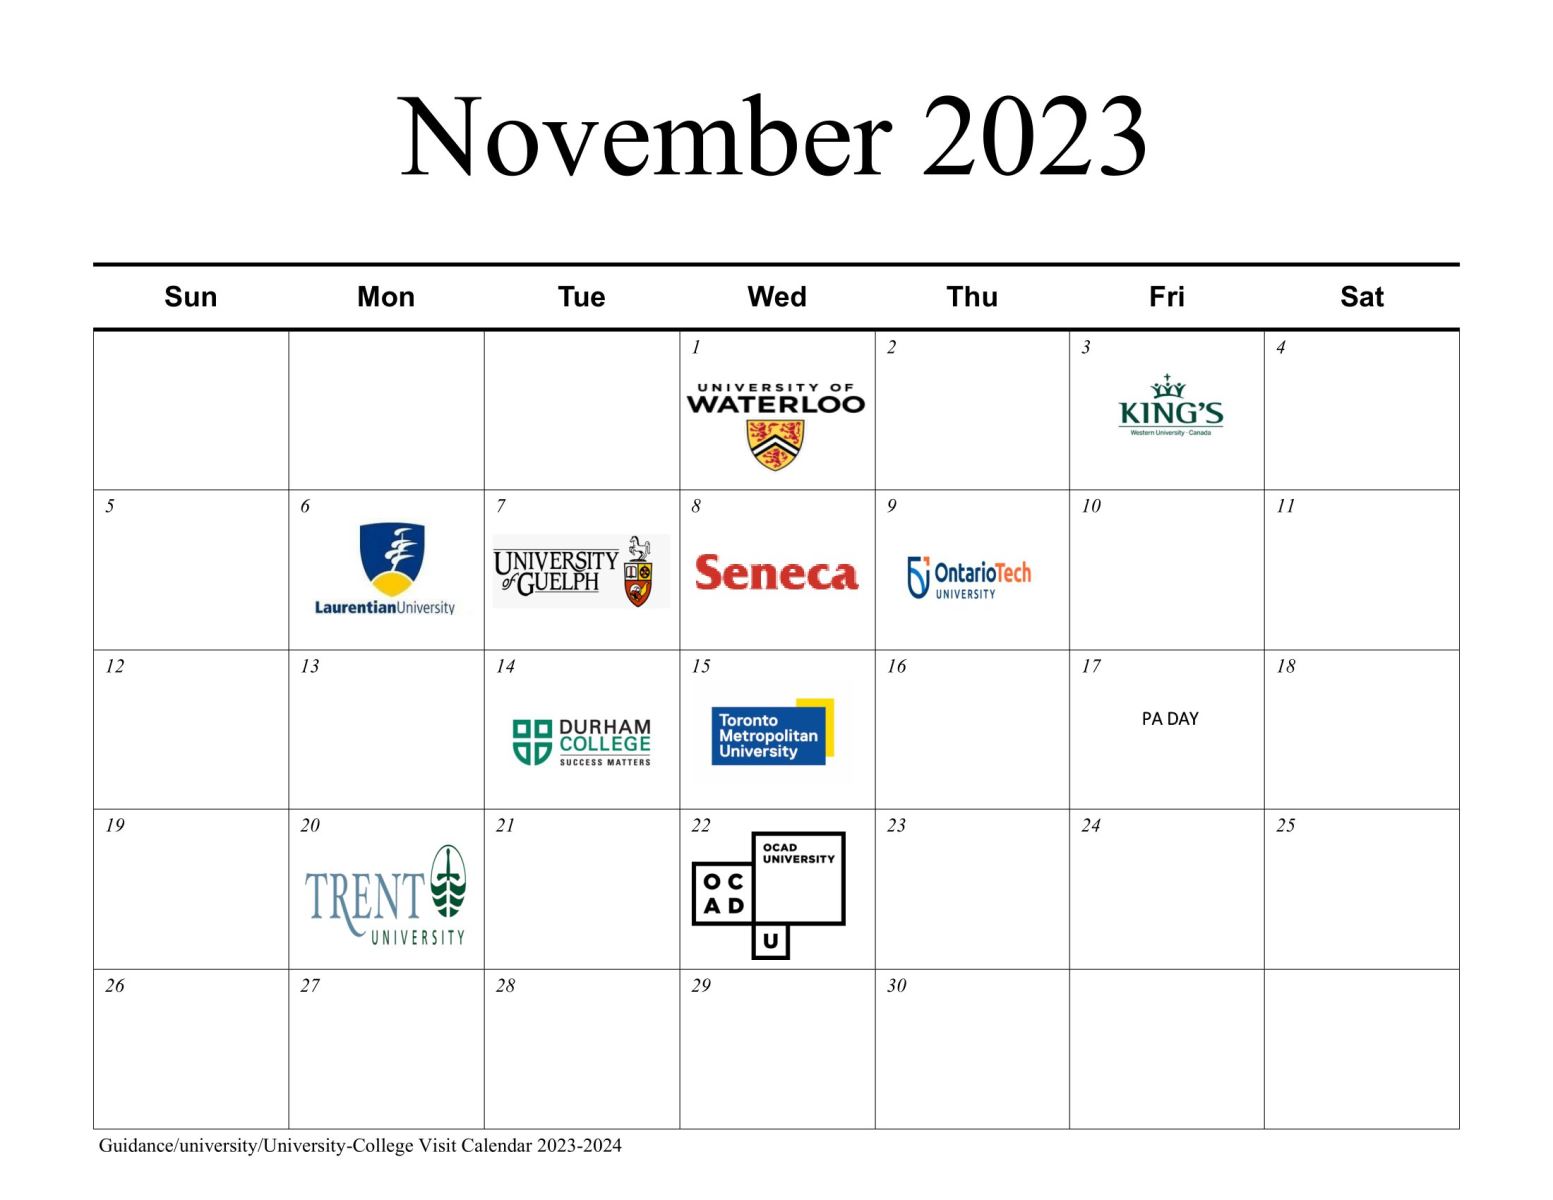 November university virtual information sessions